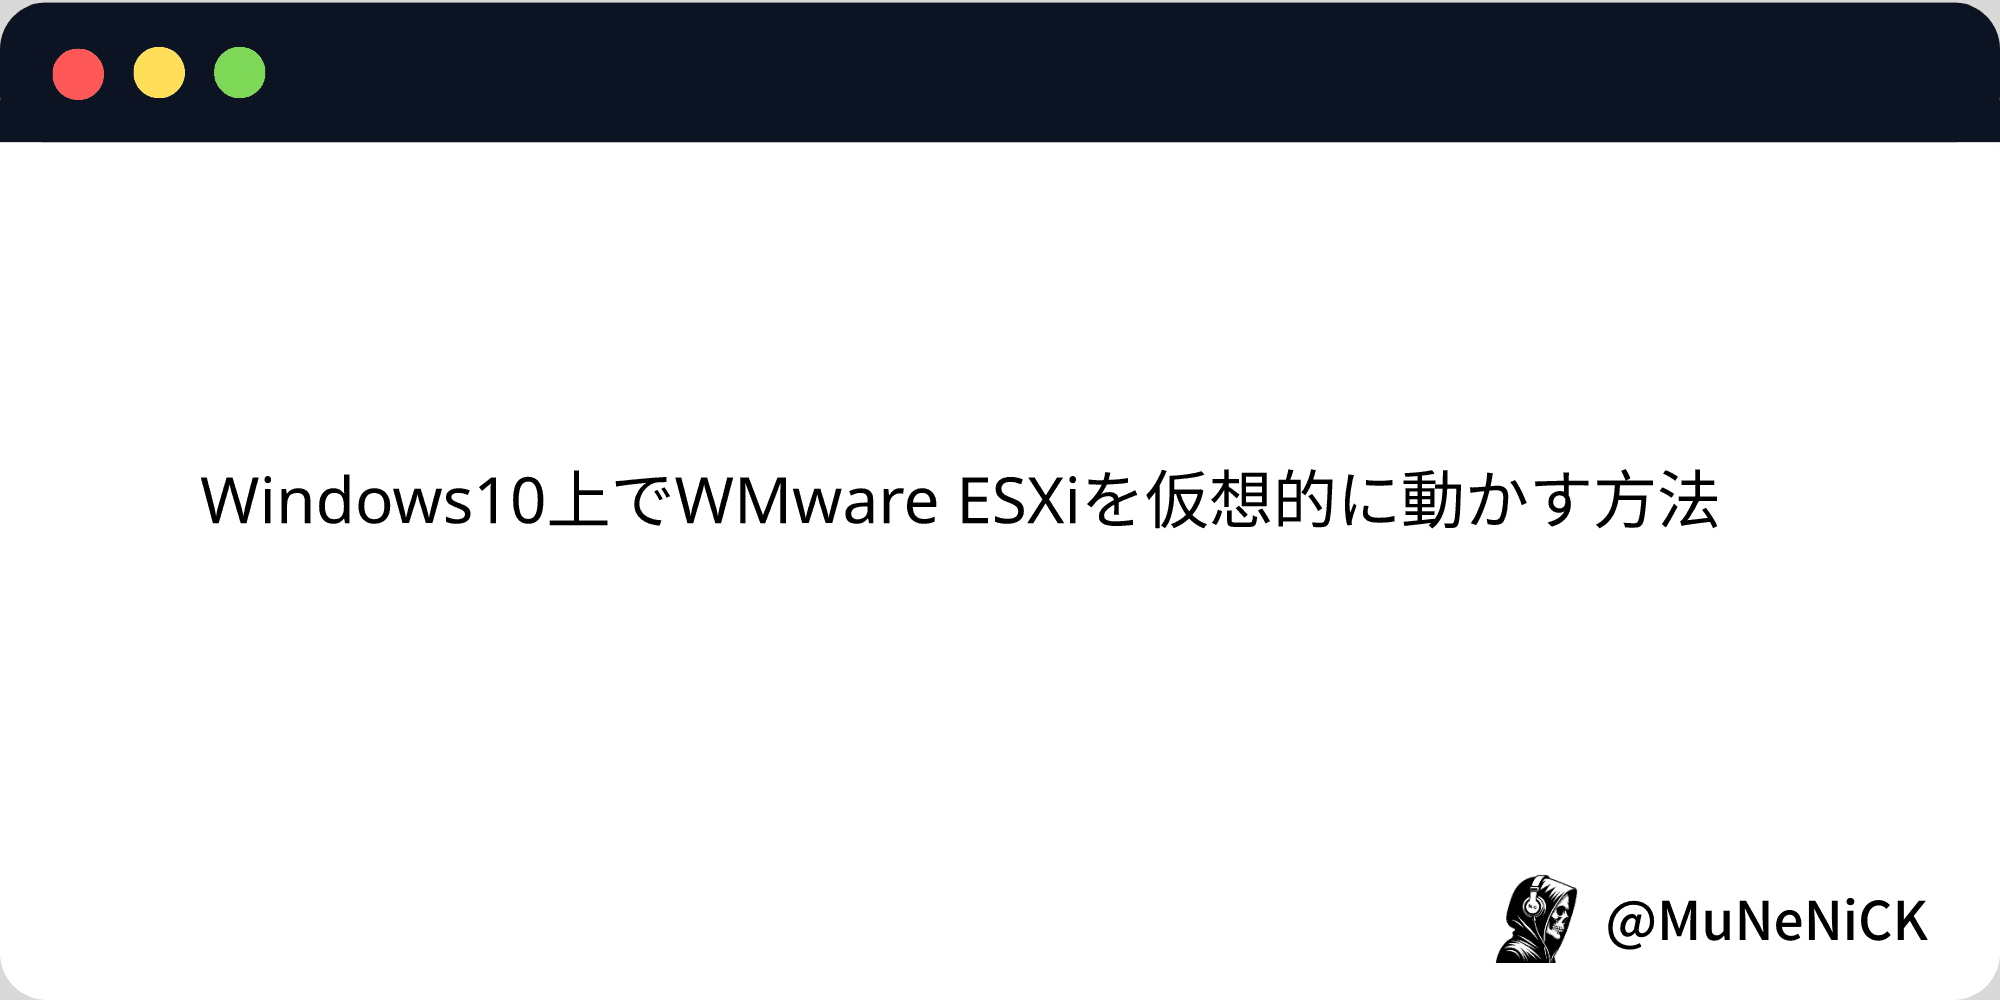 Cover Image for Windows10上でWMware ESXiを仮想的に動かす方法